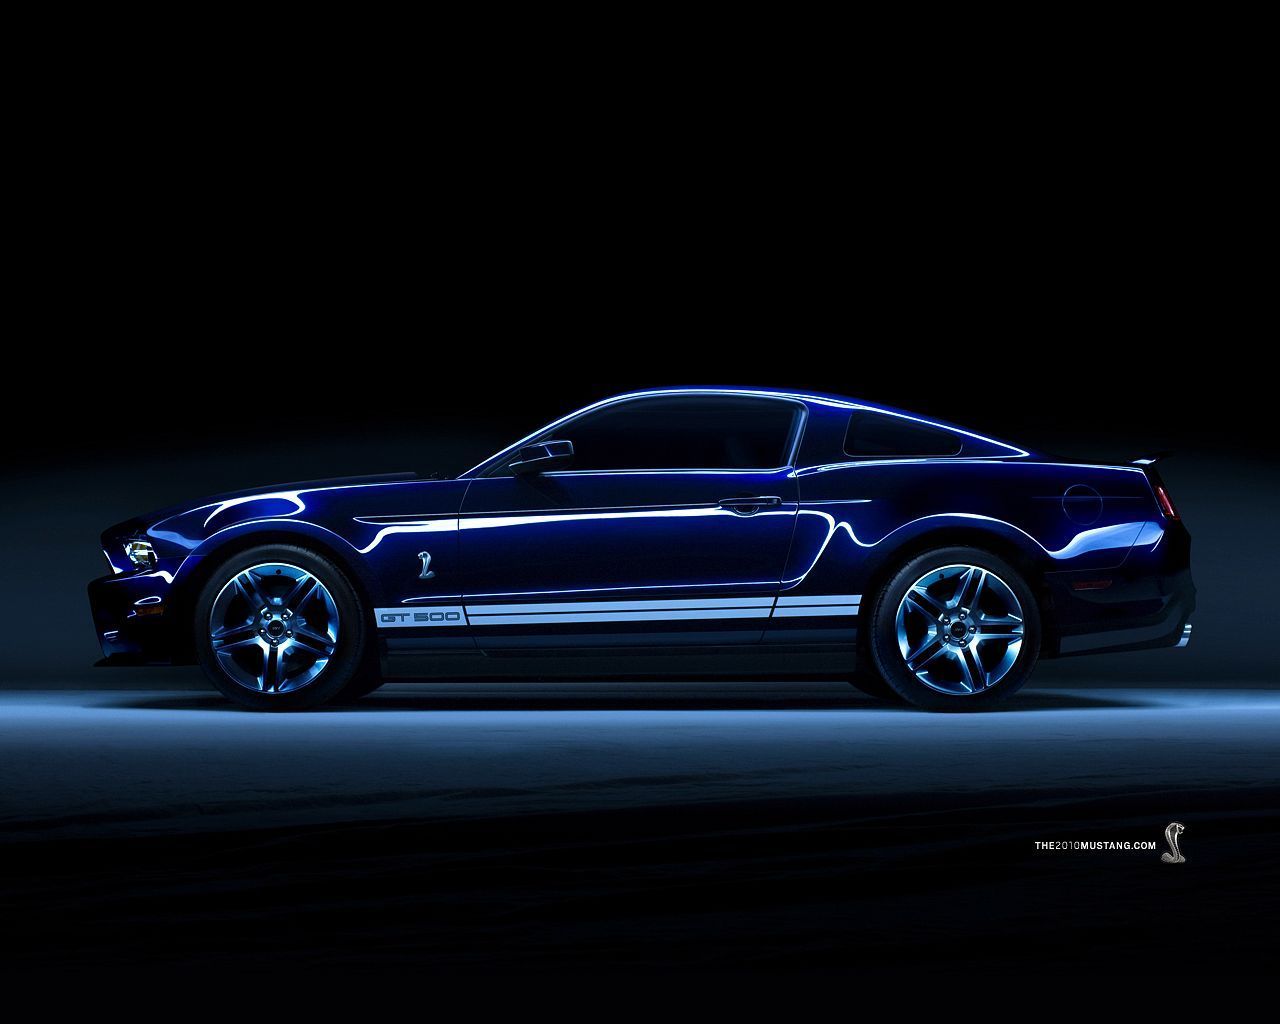 Ford Mustang 4k Ultra Hd Photo - Gt Mustang - HD Wallpaper 